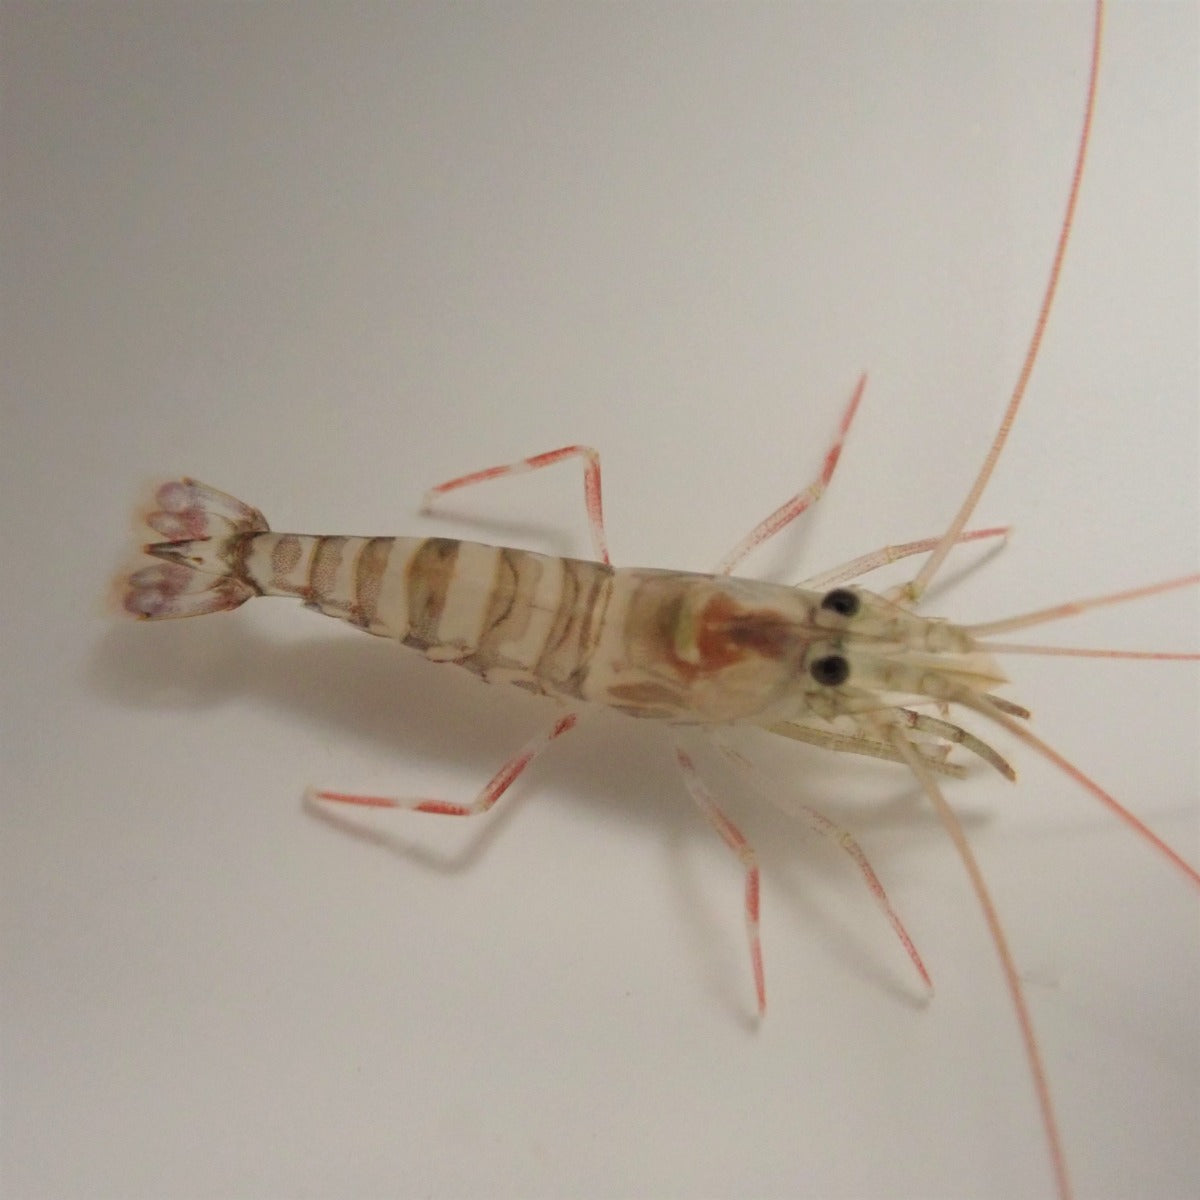 Lysmata kuekenthali - Kuekenthali's cleaner shrimp